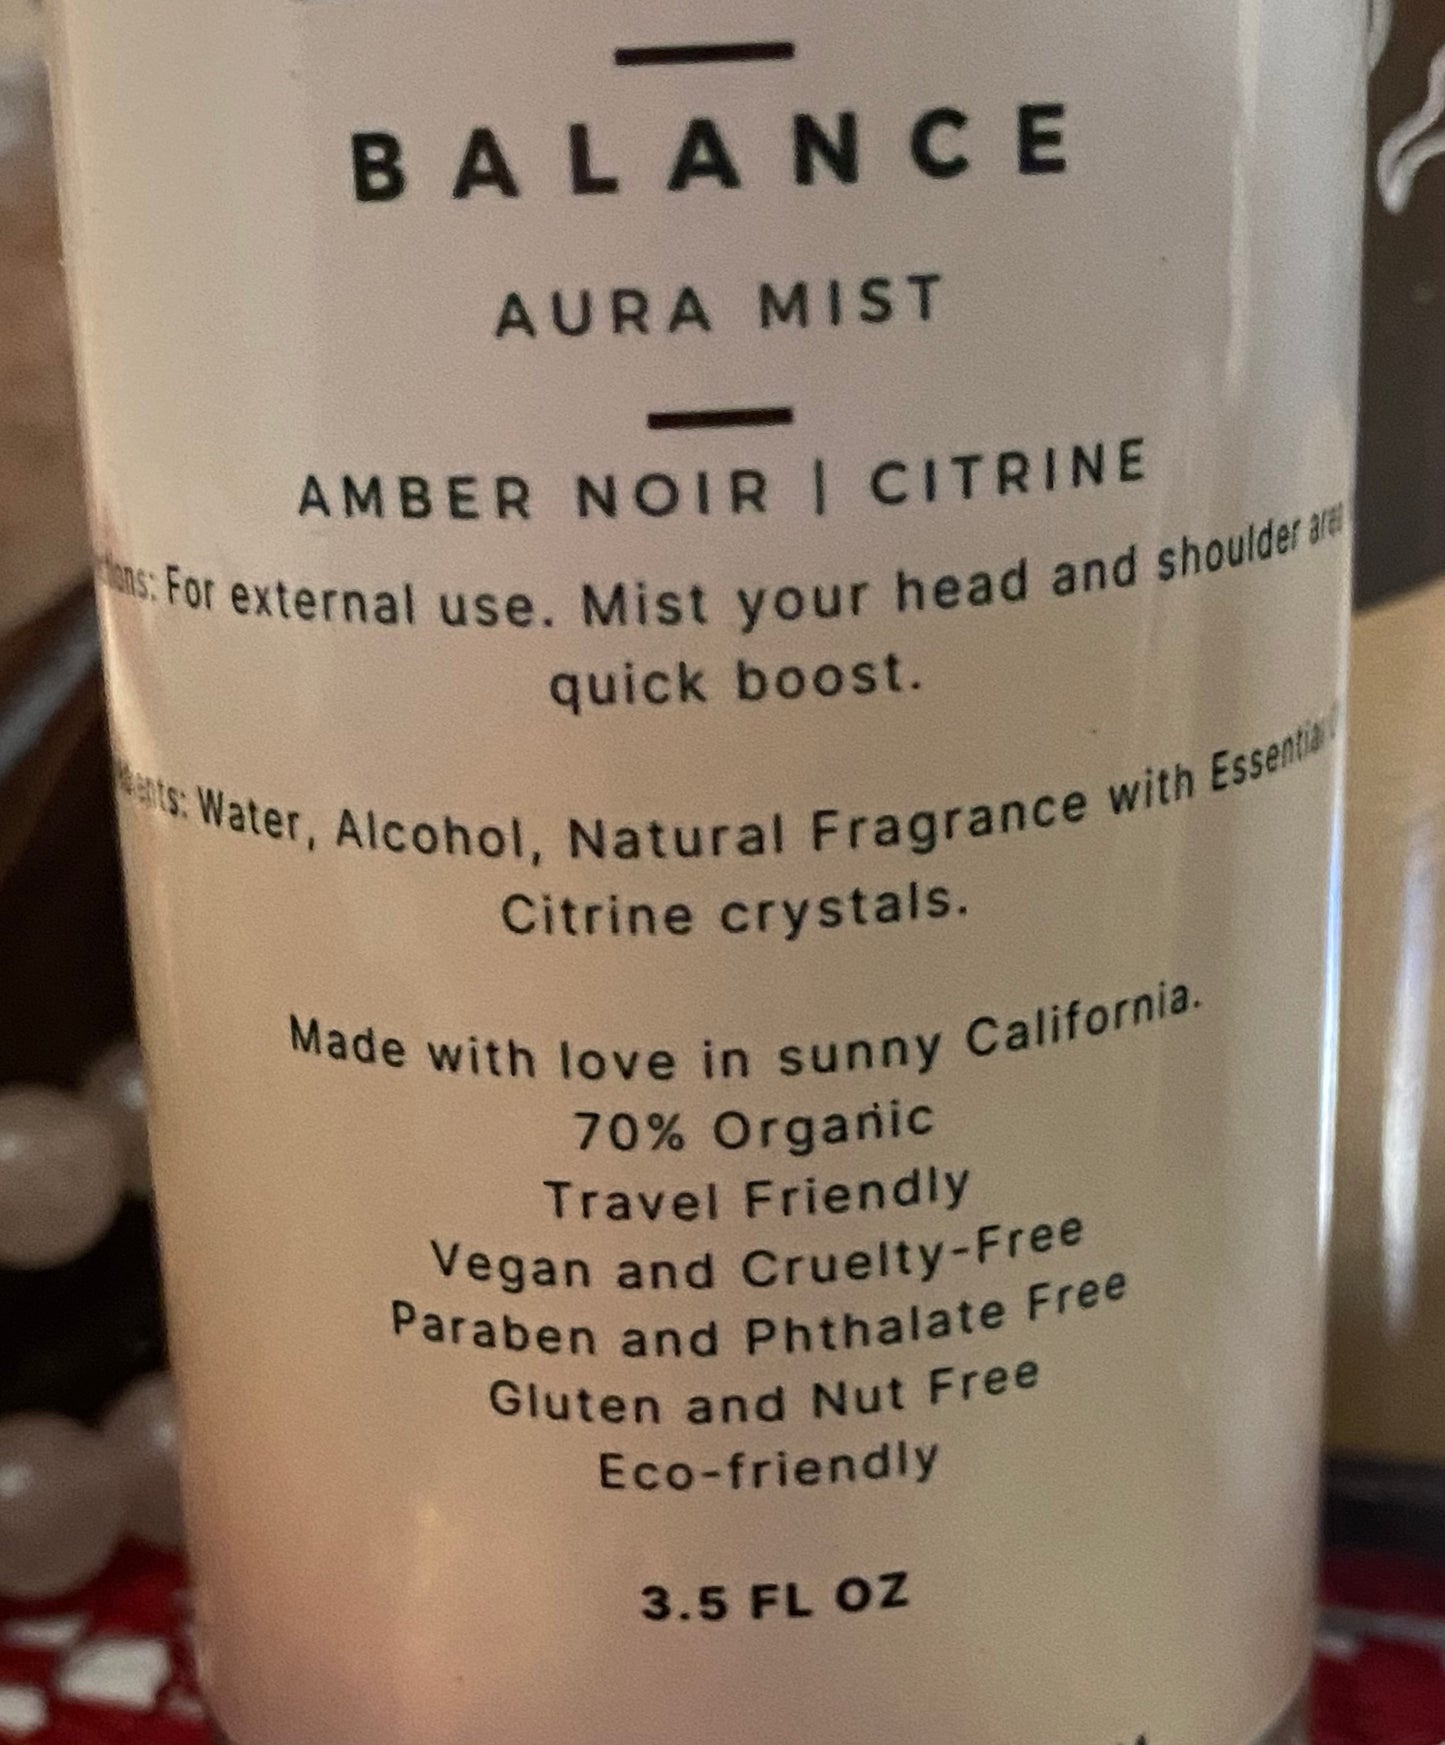 Balance Aura Mist Body Spray